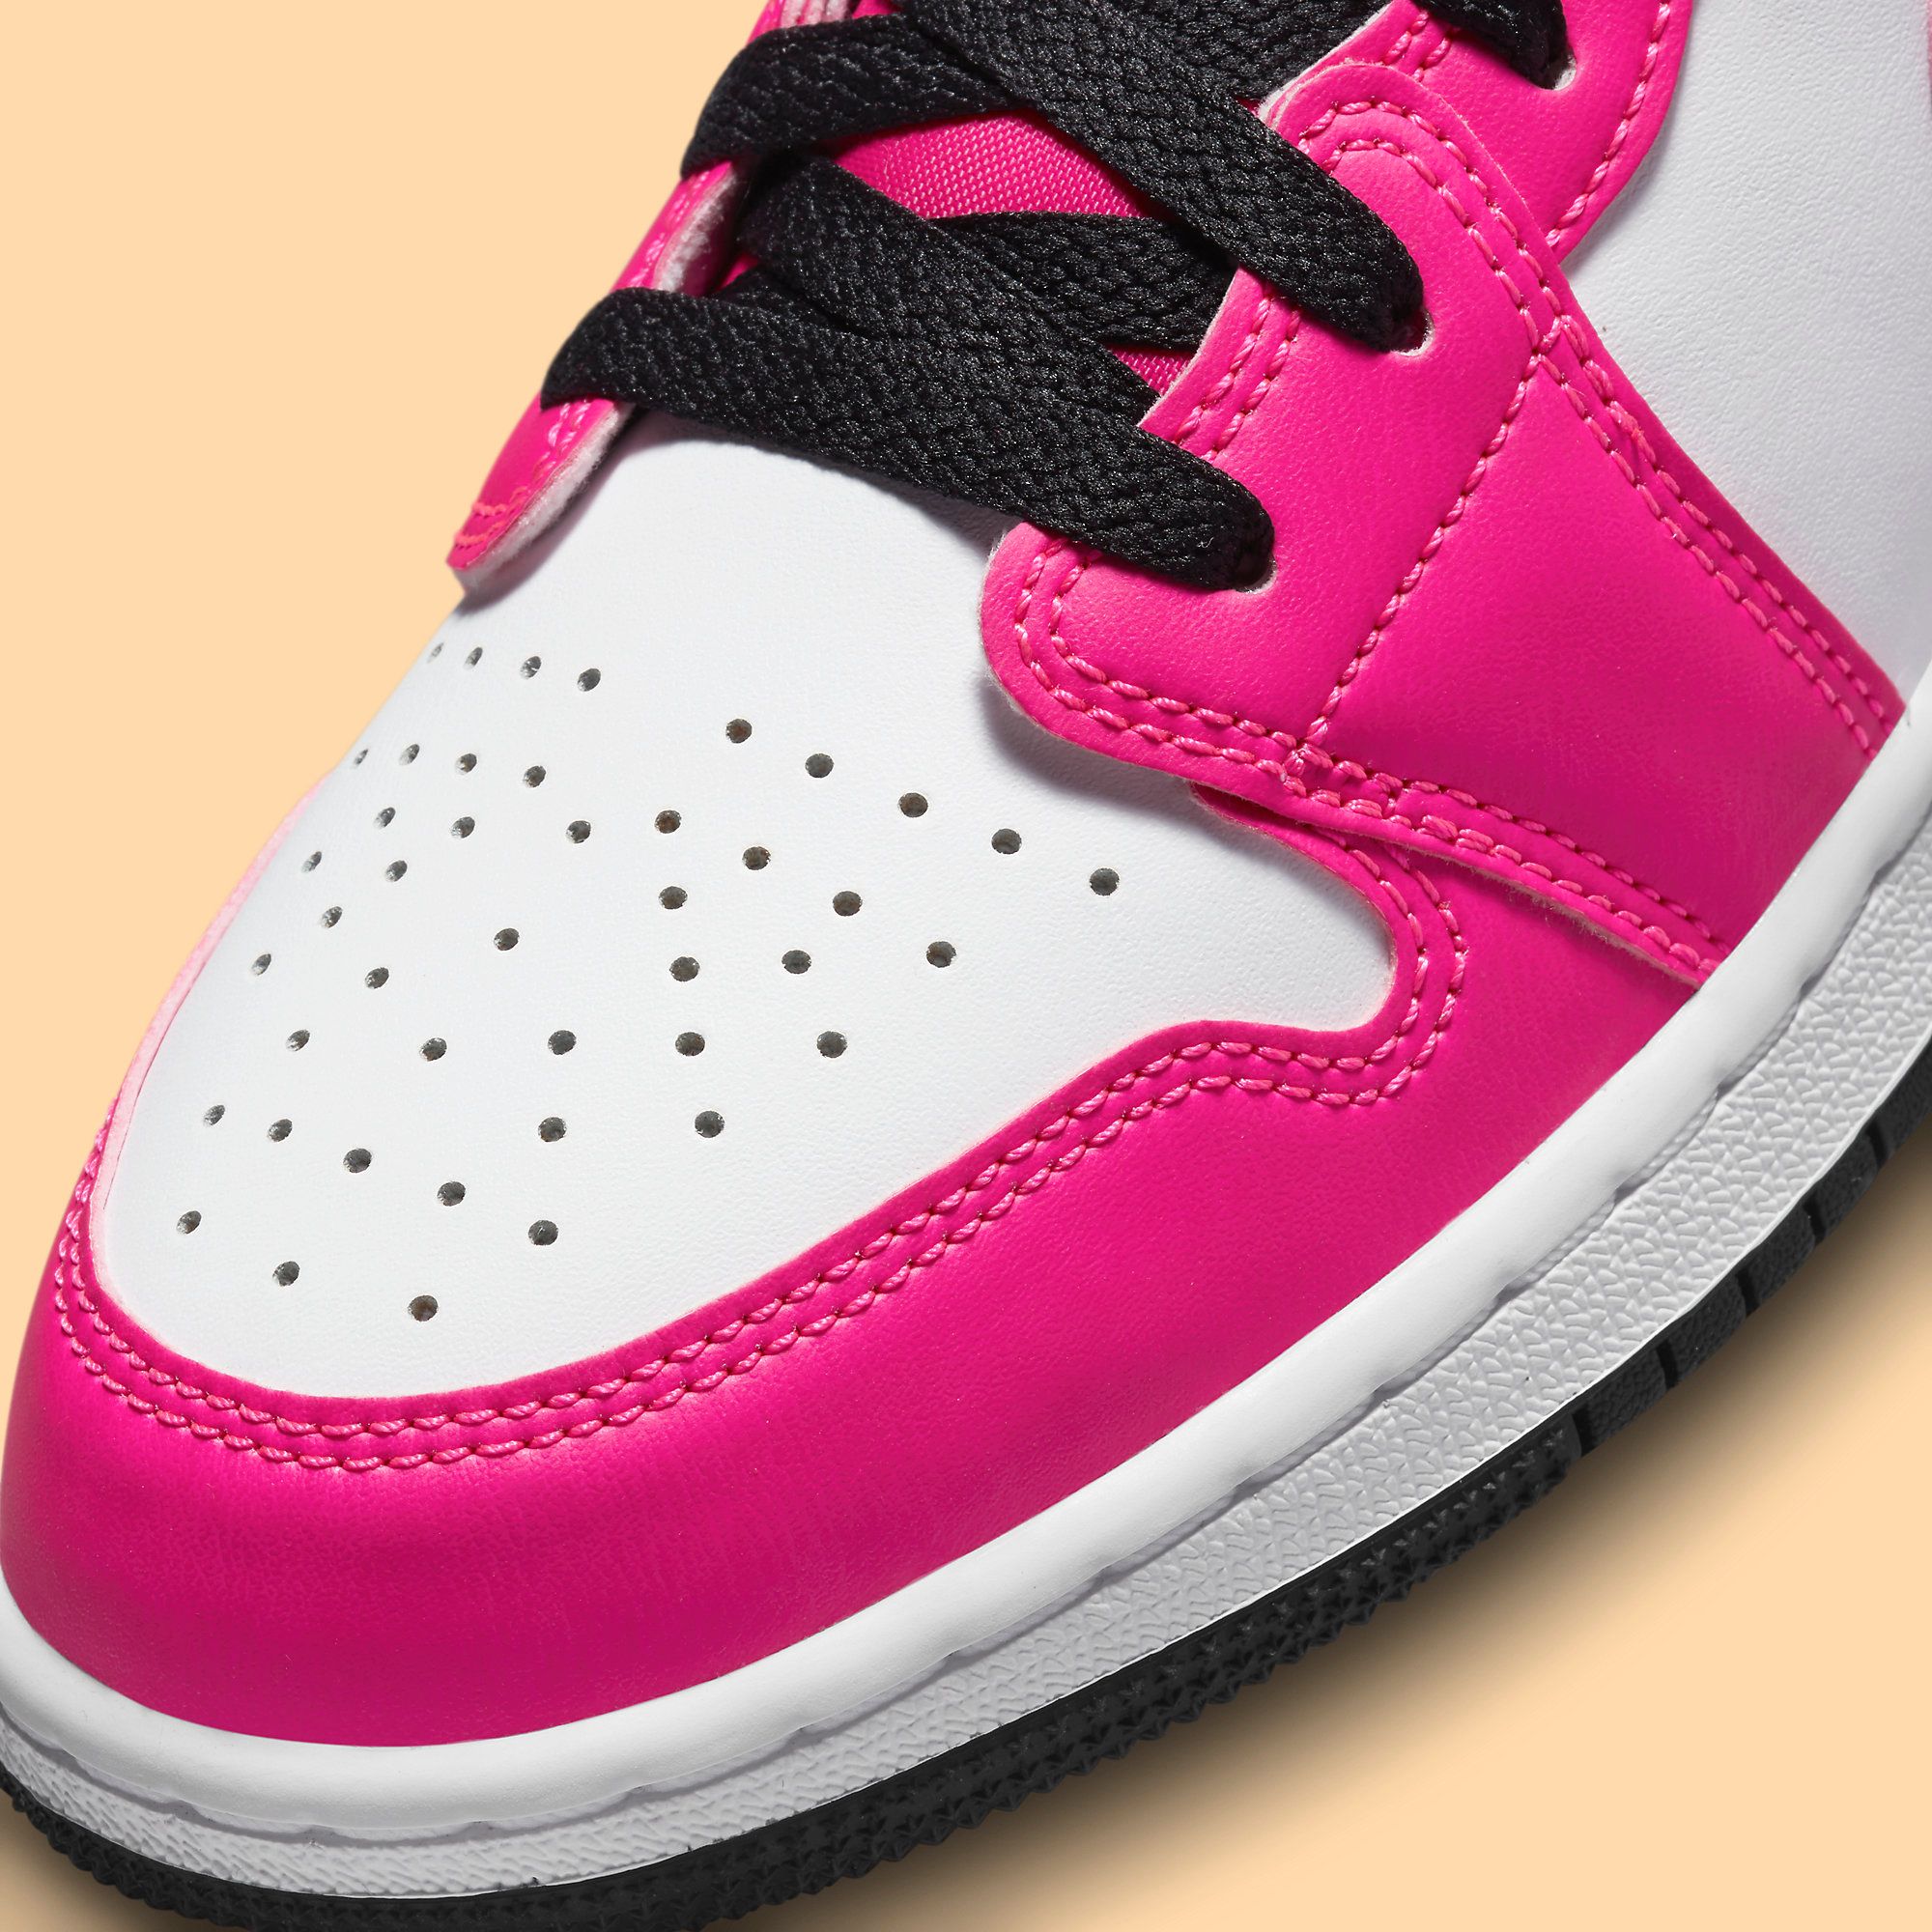 Official Images // Air Jordan 1 Low GS “Fierce Pink” | House of Heat°